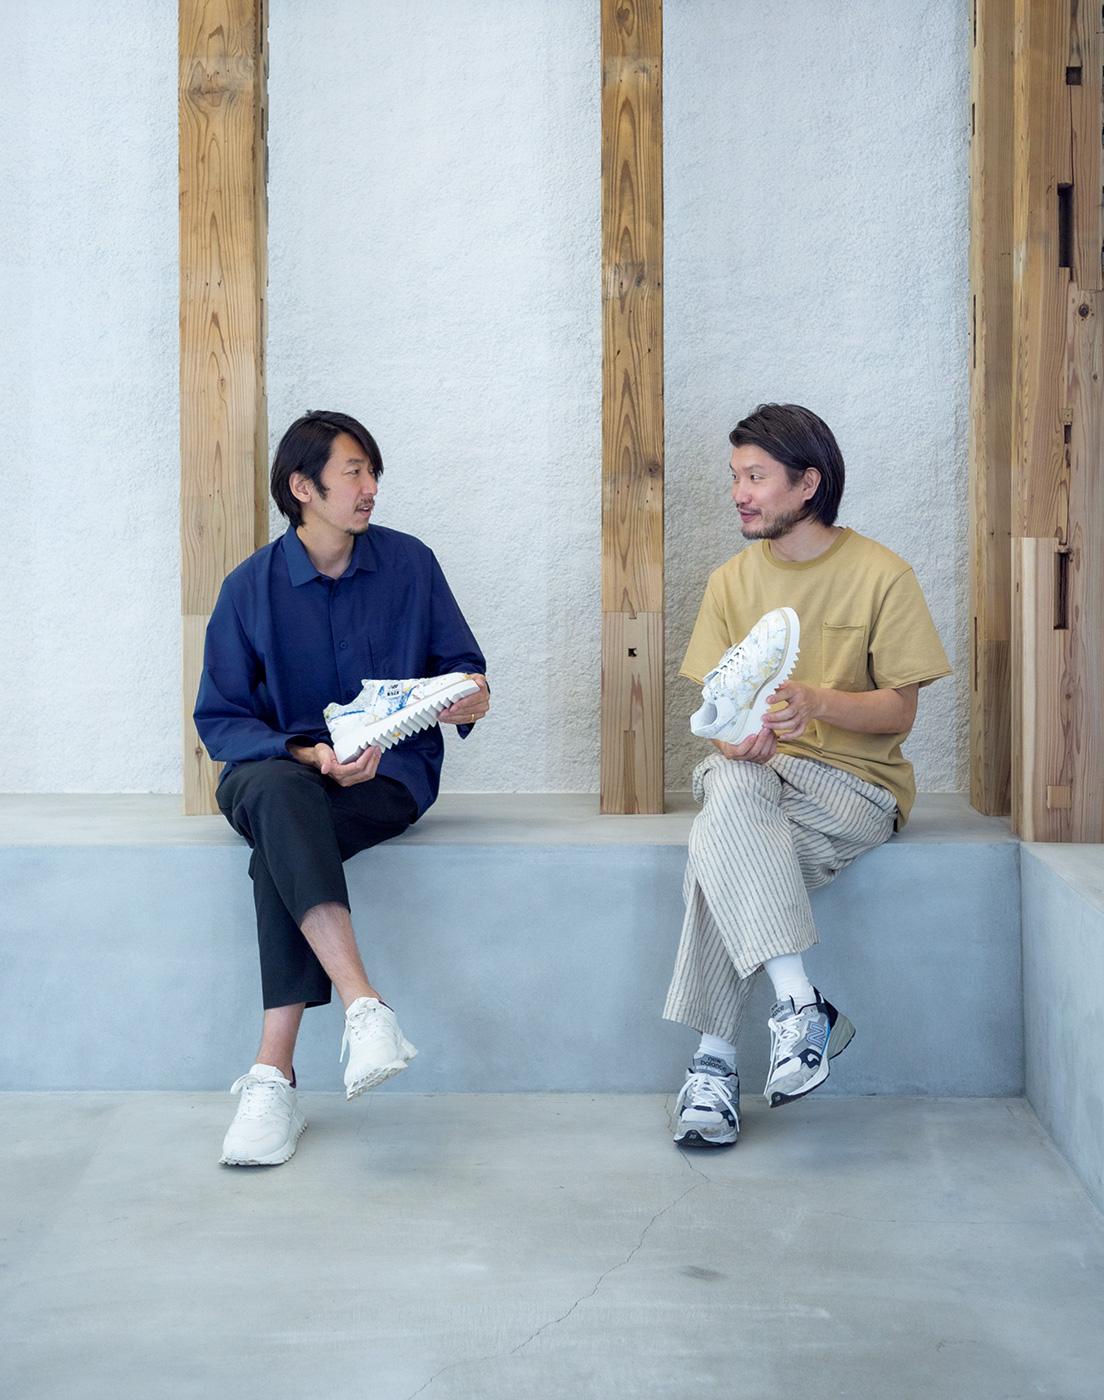 Yoshihisa Tanaka（左）、Shugo Moritani（右）。昨年11月に続く2度目の展示では、より具体的な試みに踏み込み、展示用のスニーカーに加えてシューズボックスも制作。〈T-HOUSE New Balance〉にて。